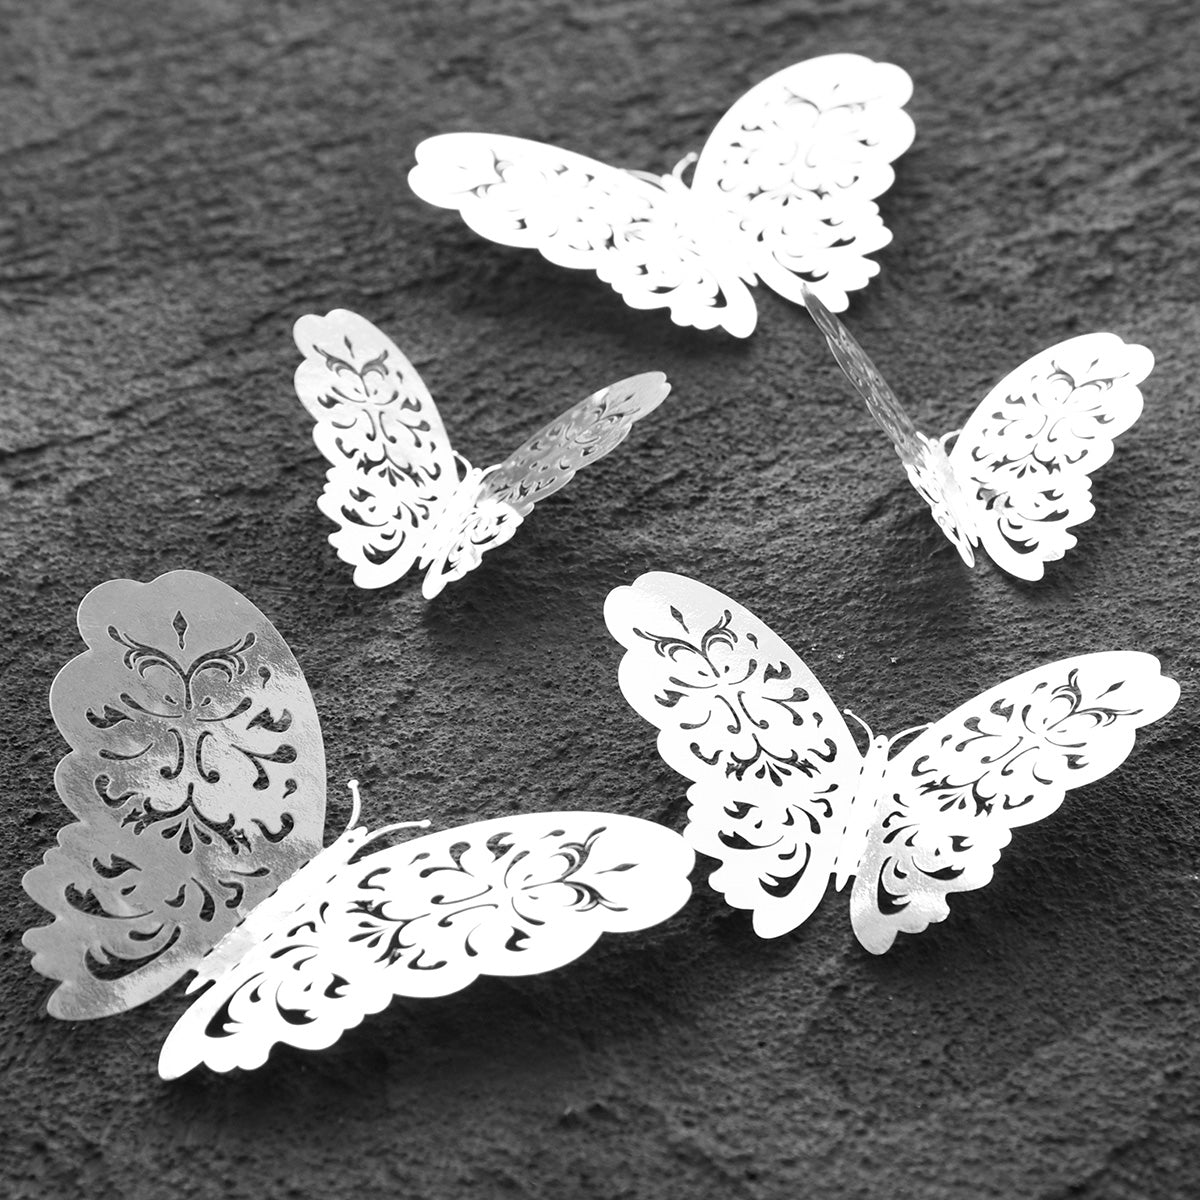 Silver Butterflies Wall Decorations Set - Floral Hollow Design